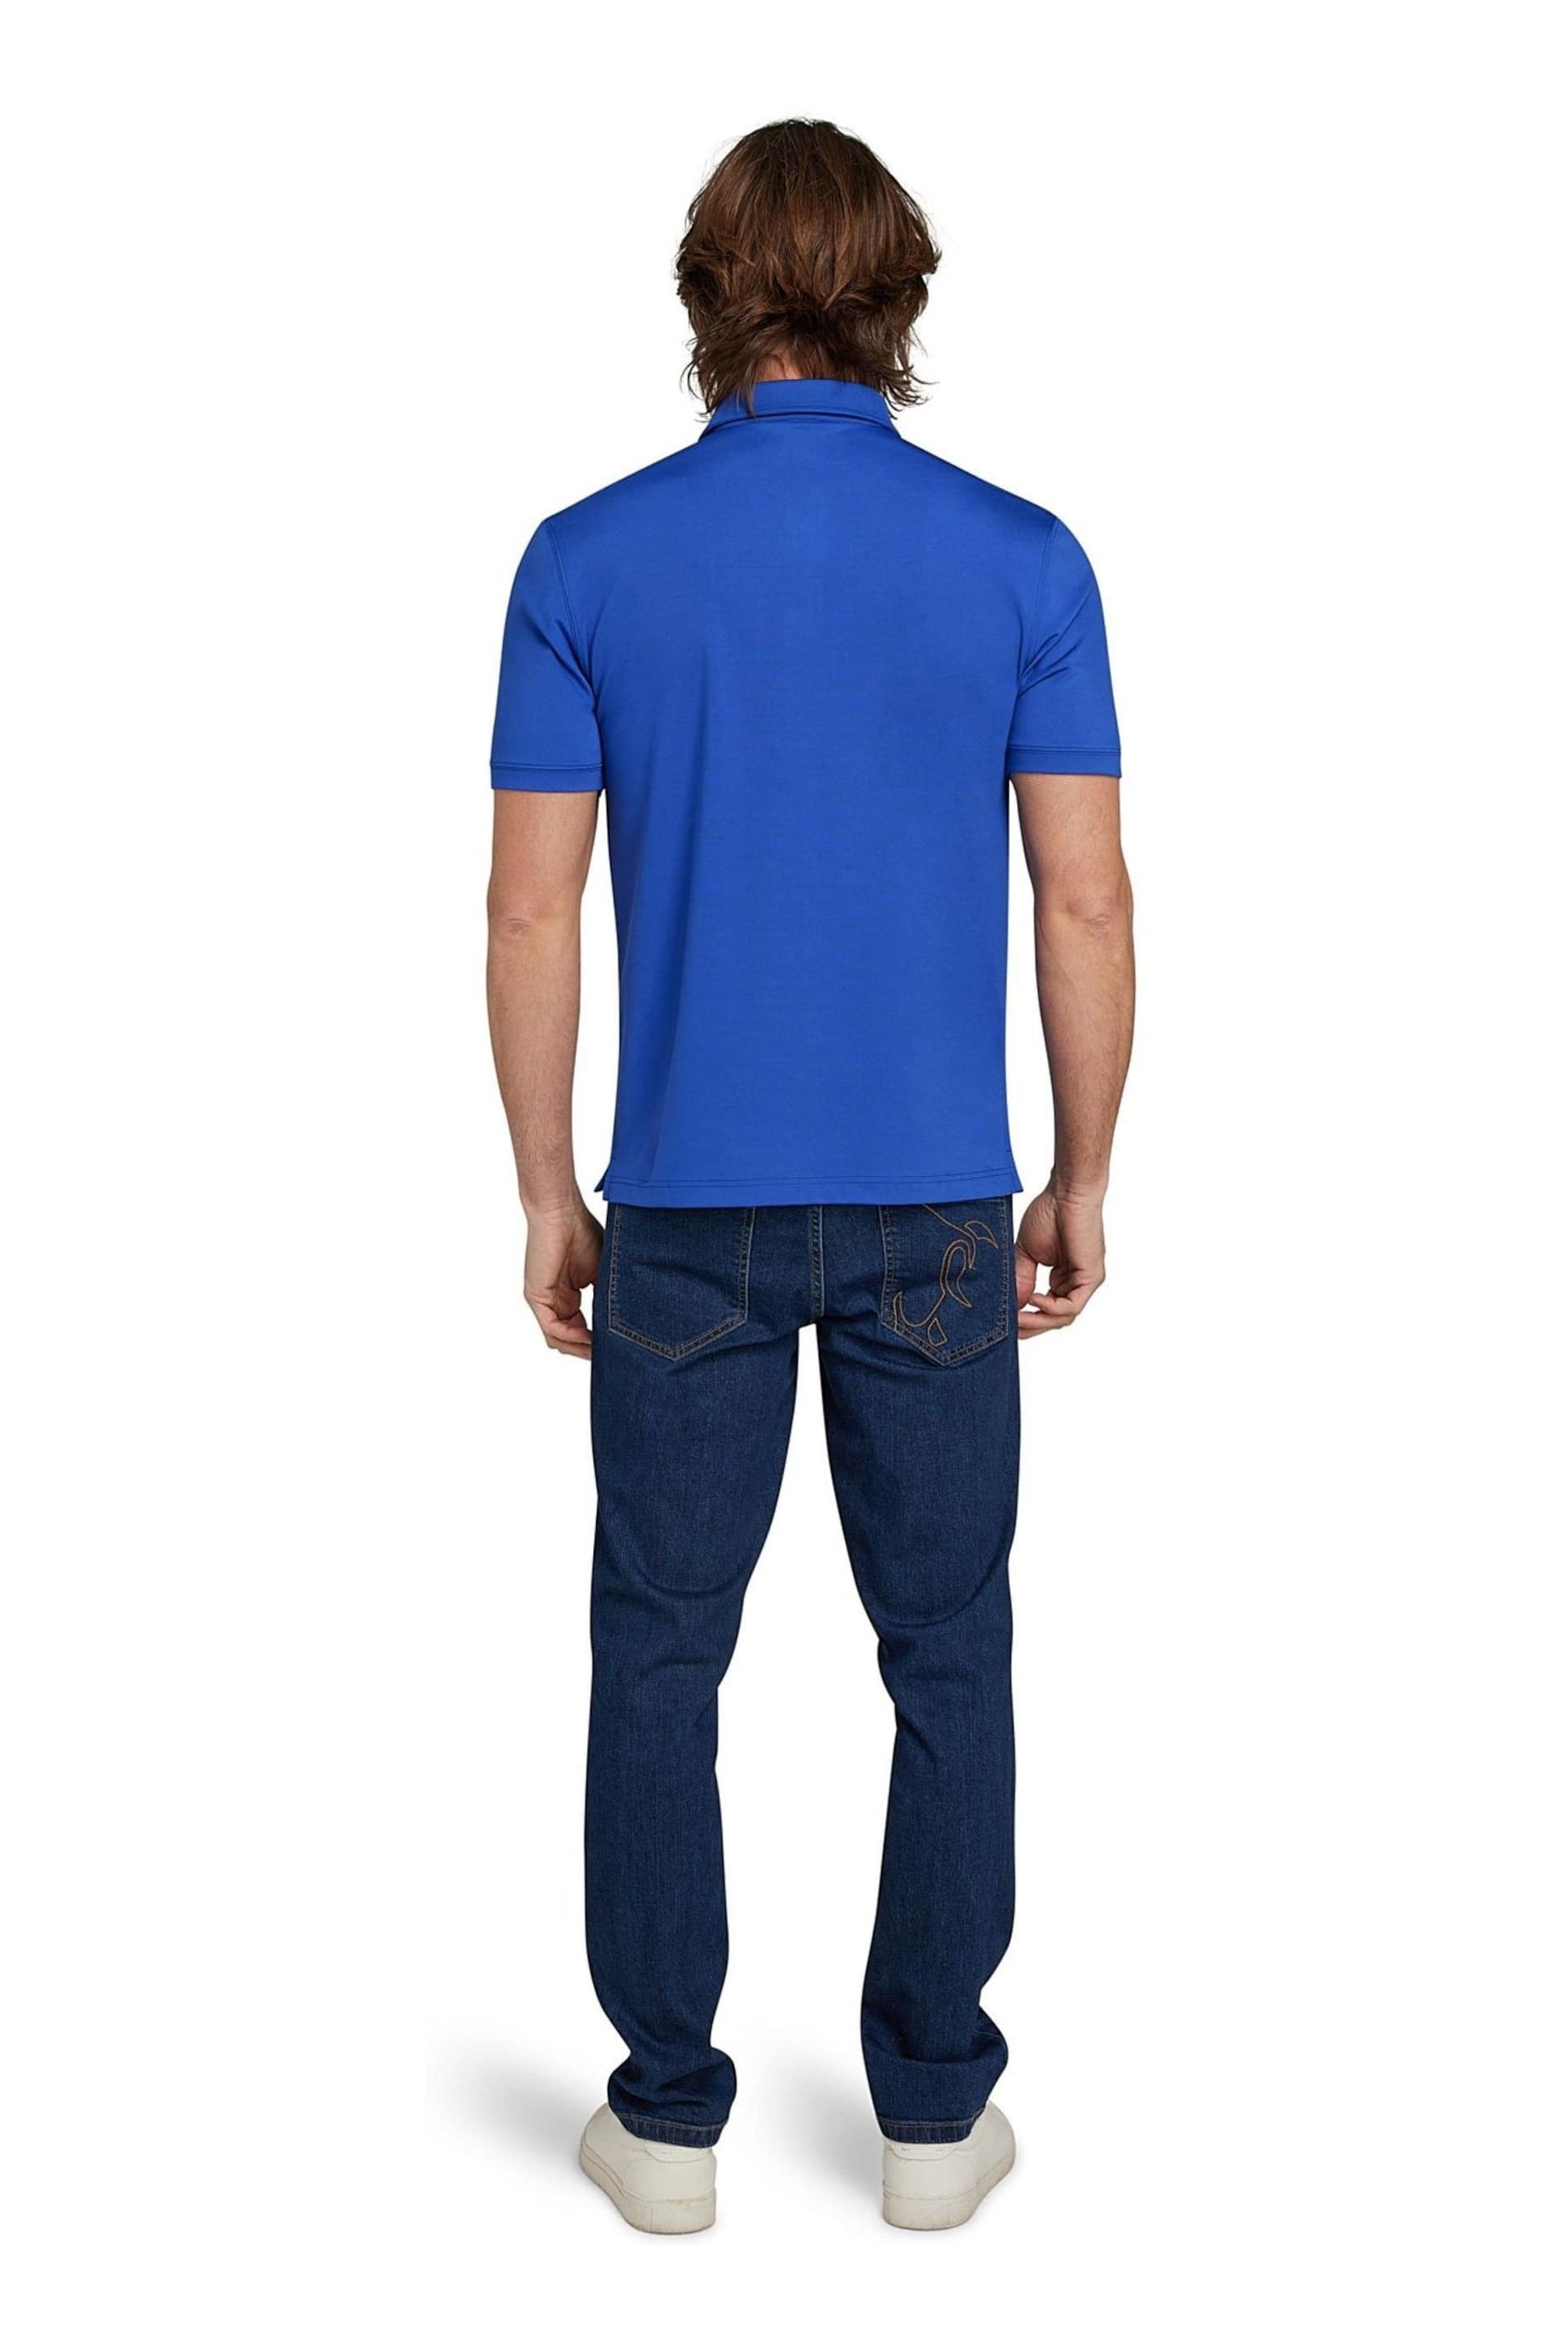 Raging Bull Blue Golf Tech Polo Shirt - Image 3 of 6